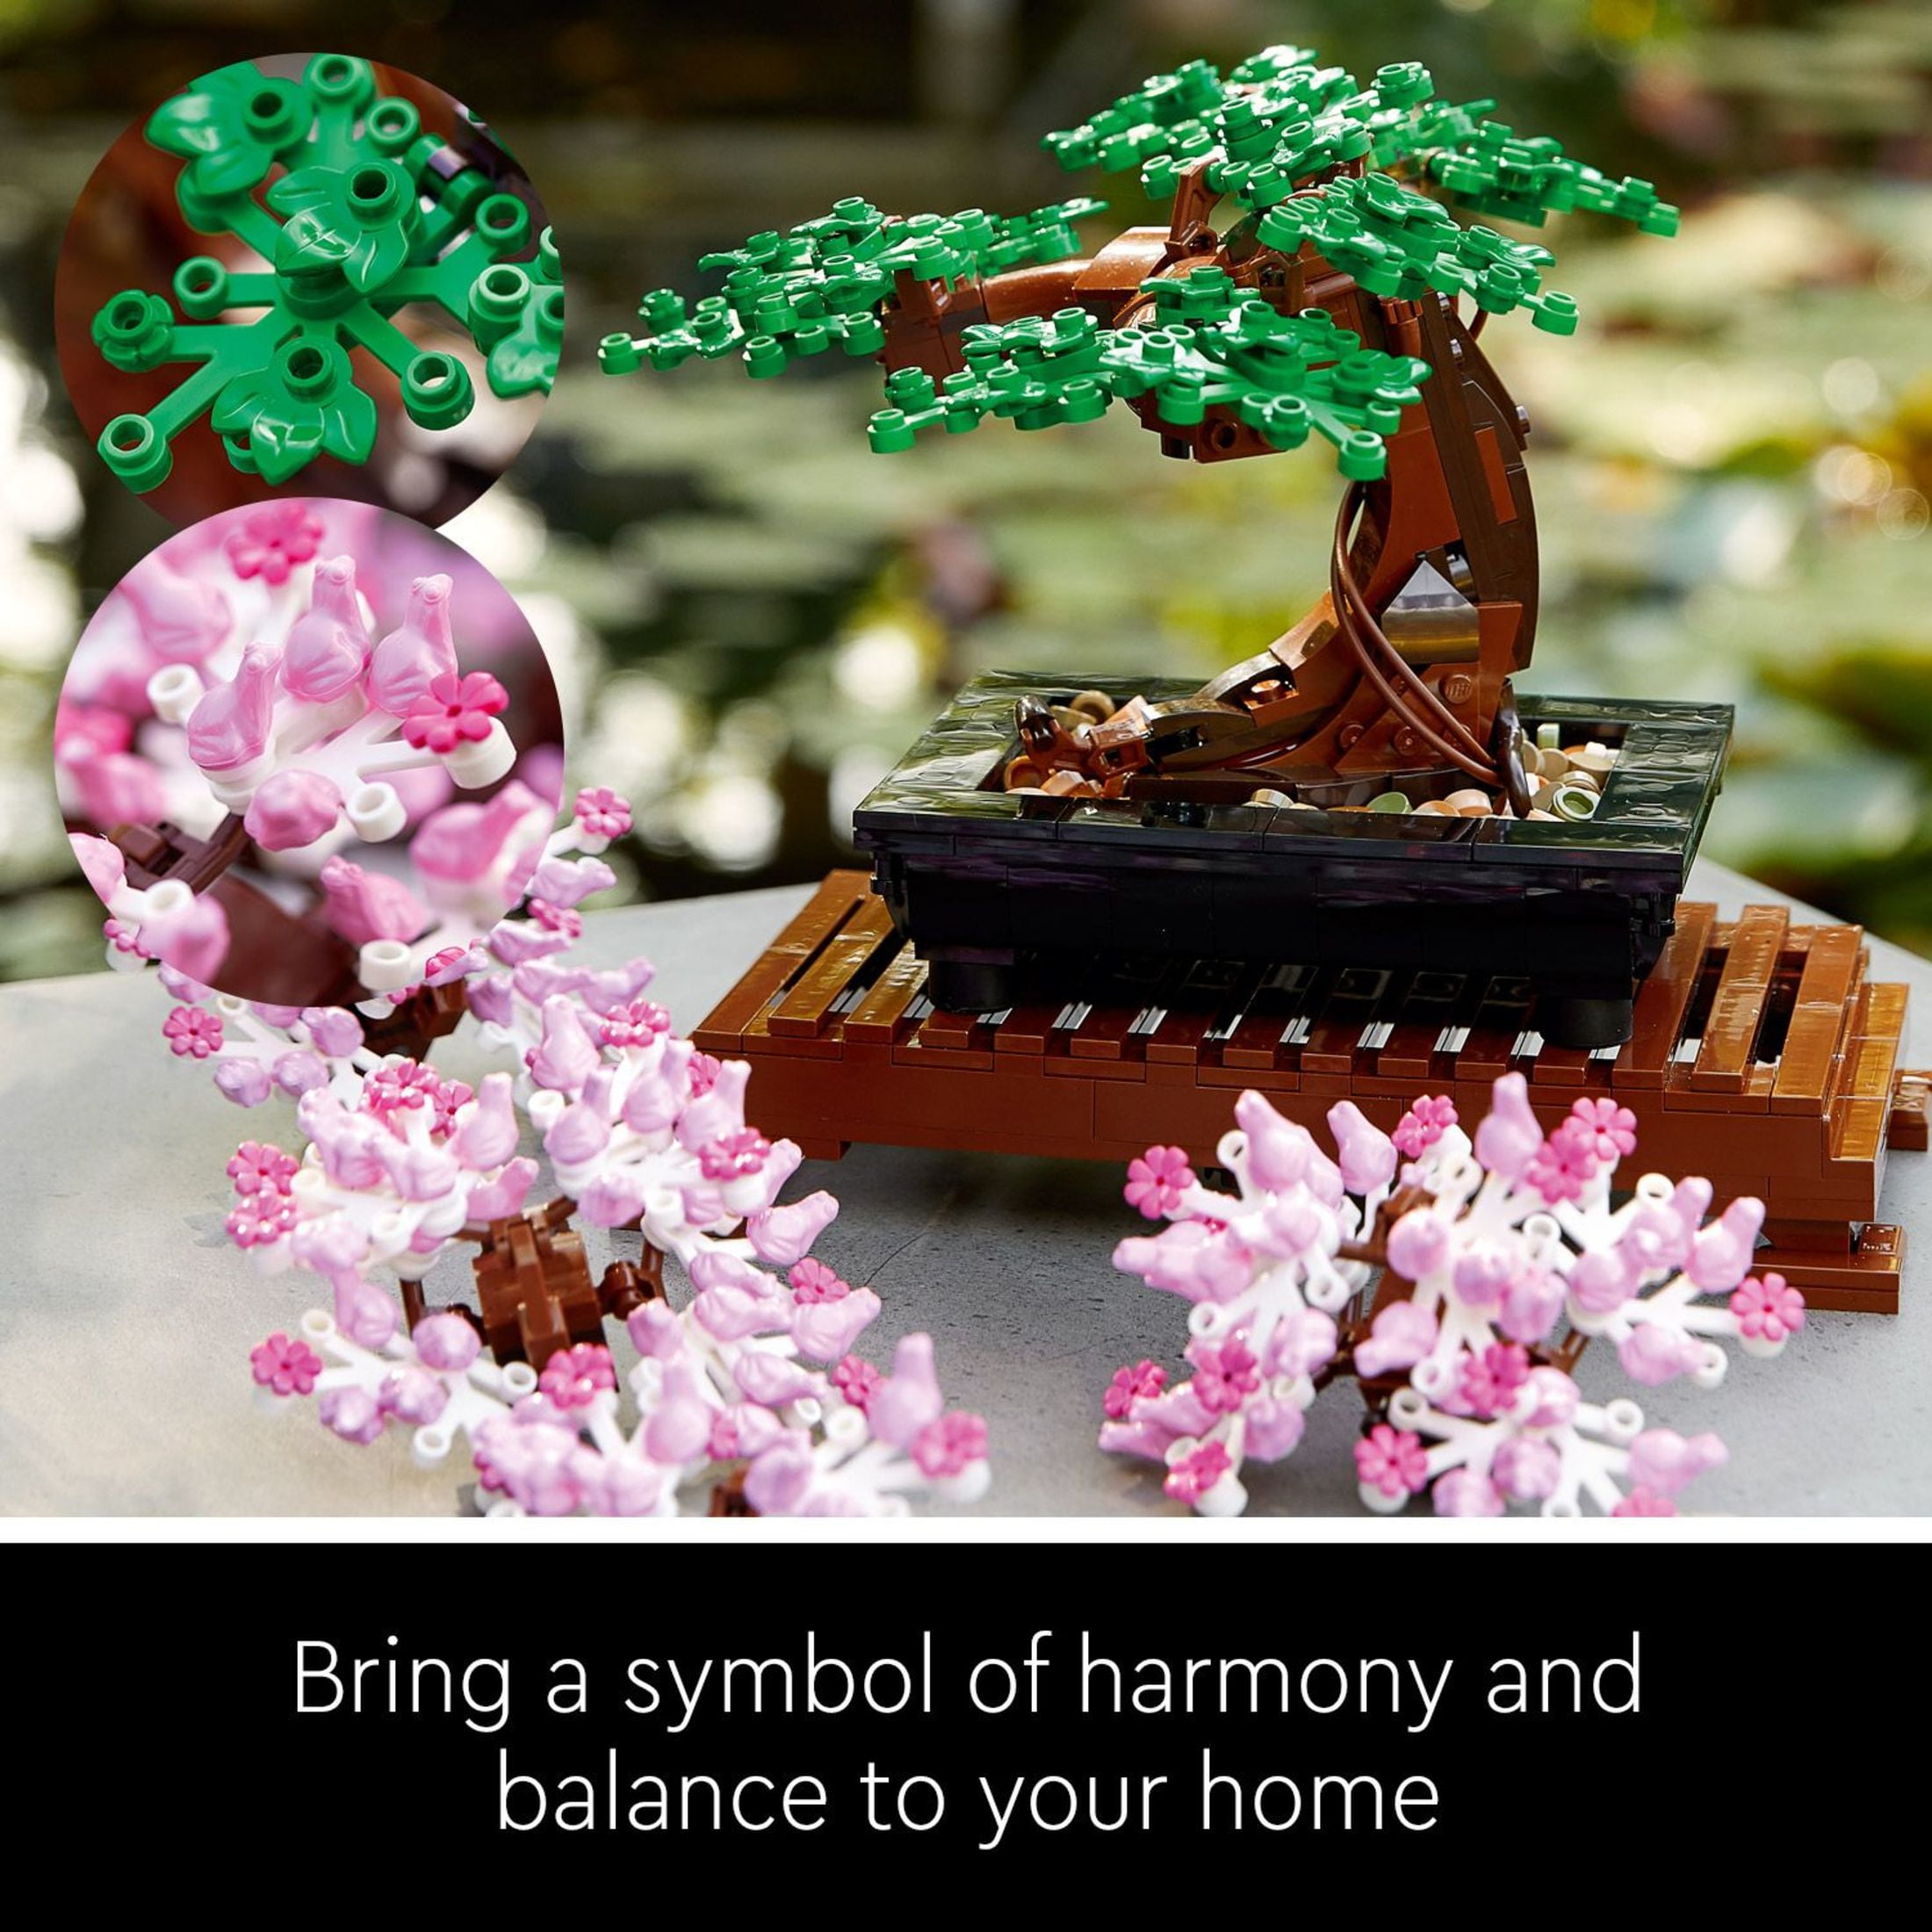 LEGO Bonsai Tree: Home Decor or Toy Photography Diorama?